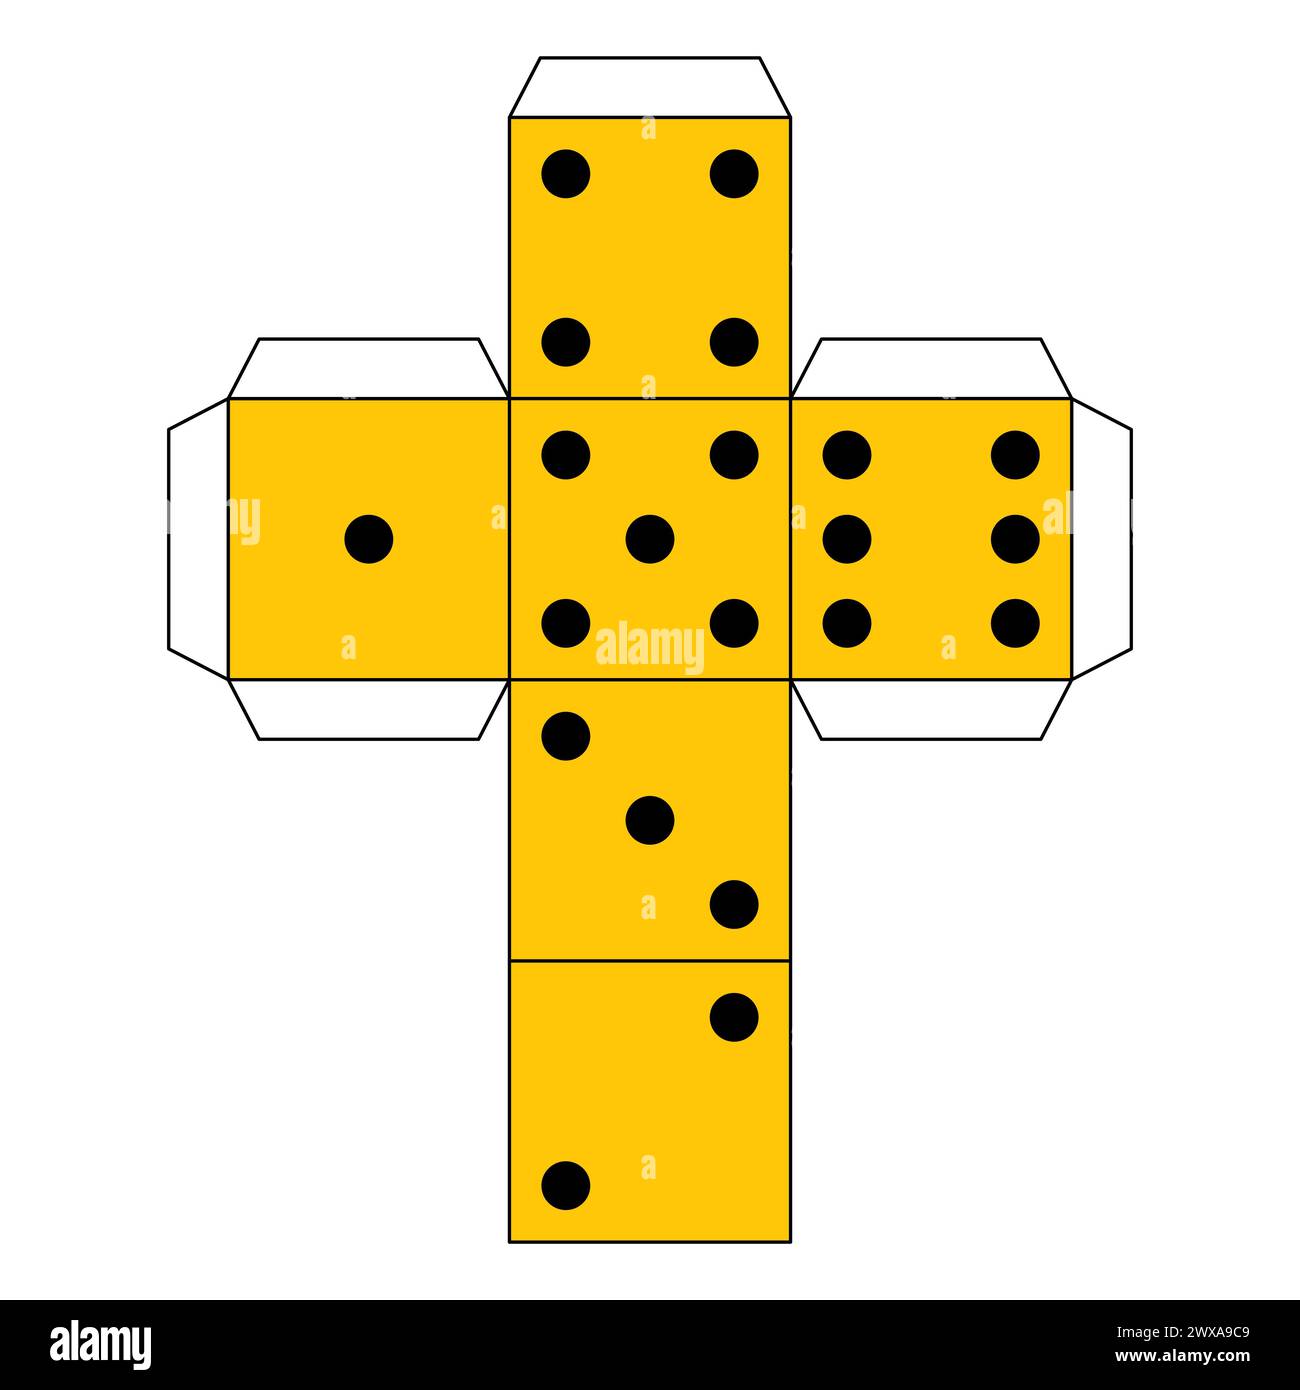 Flat paper dice template scheme: games concept Stock Vector